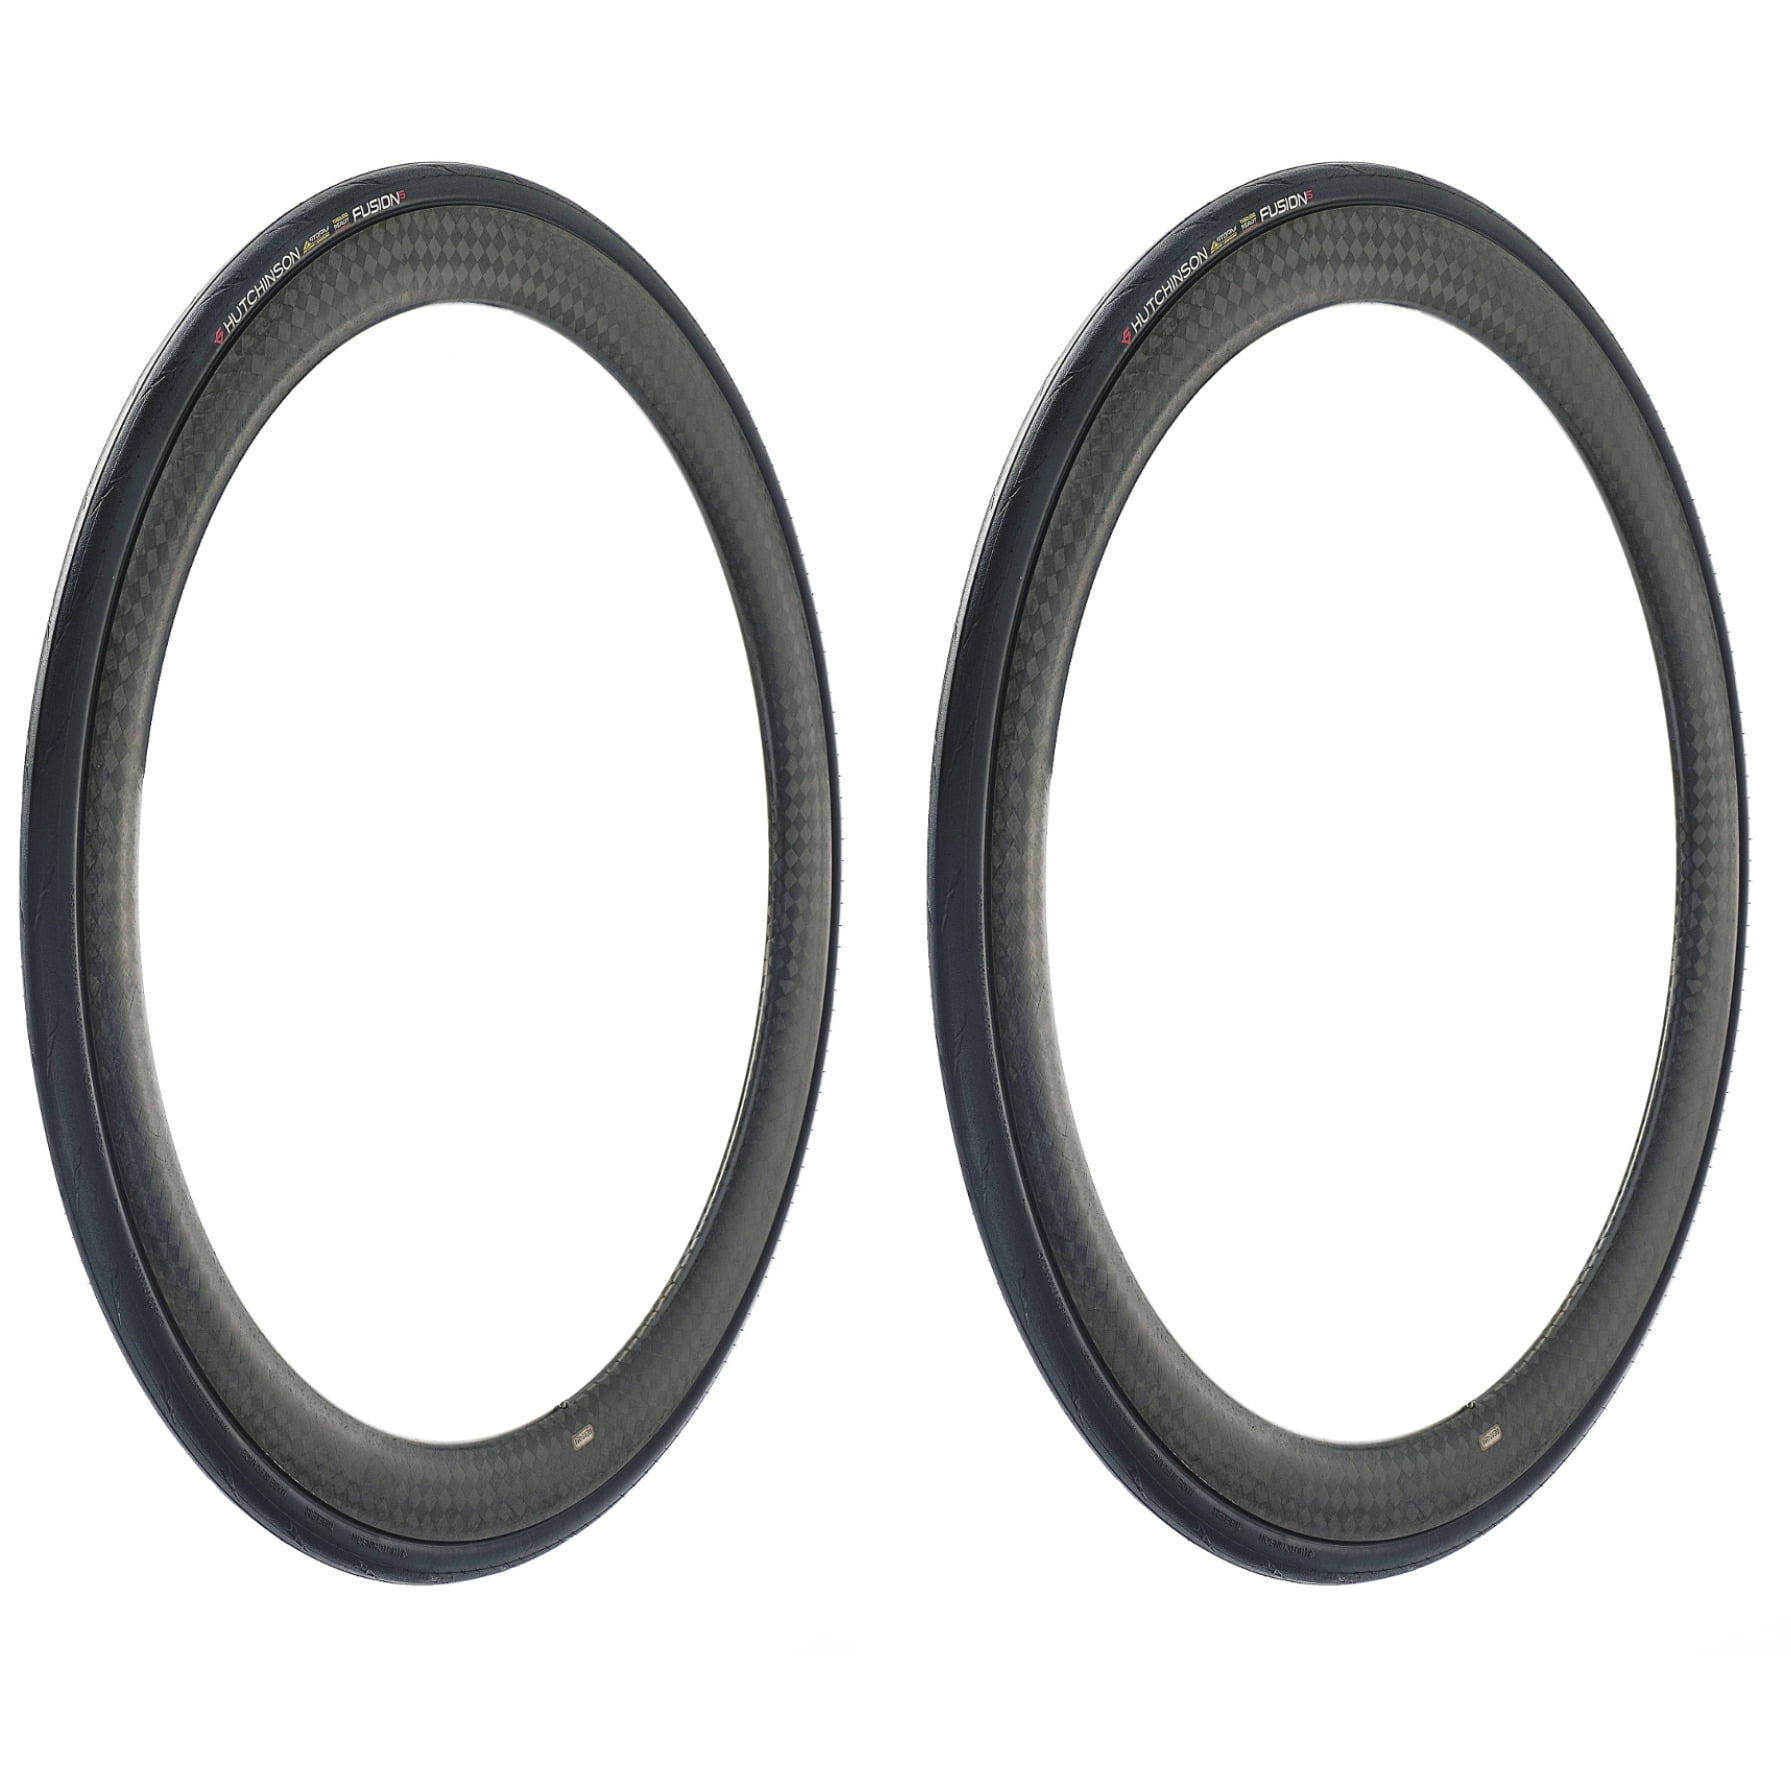 700x23 tubeless tires